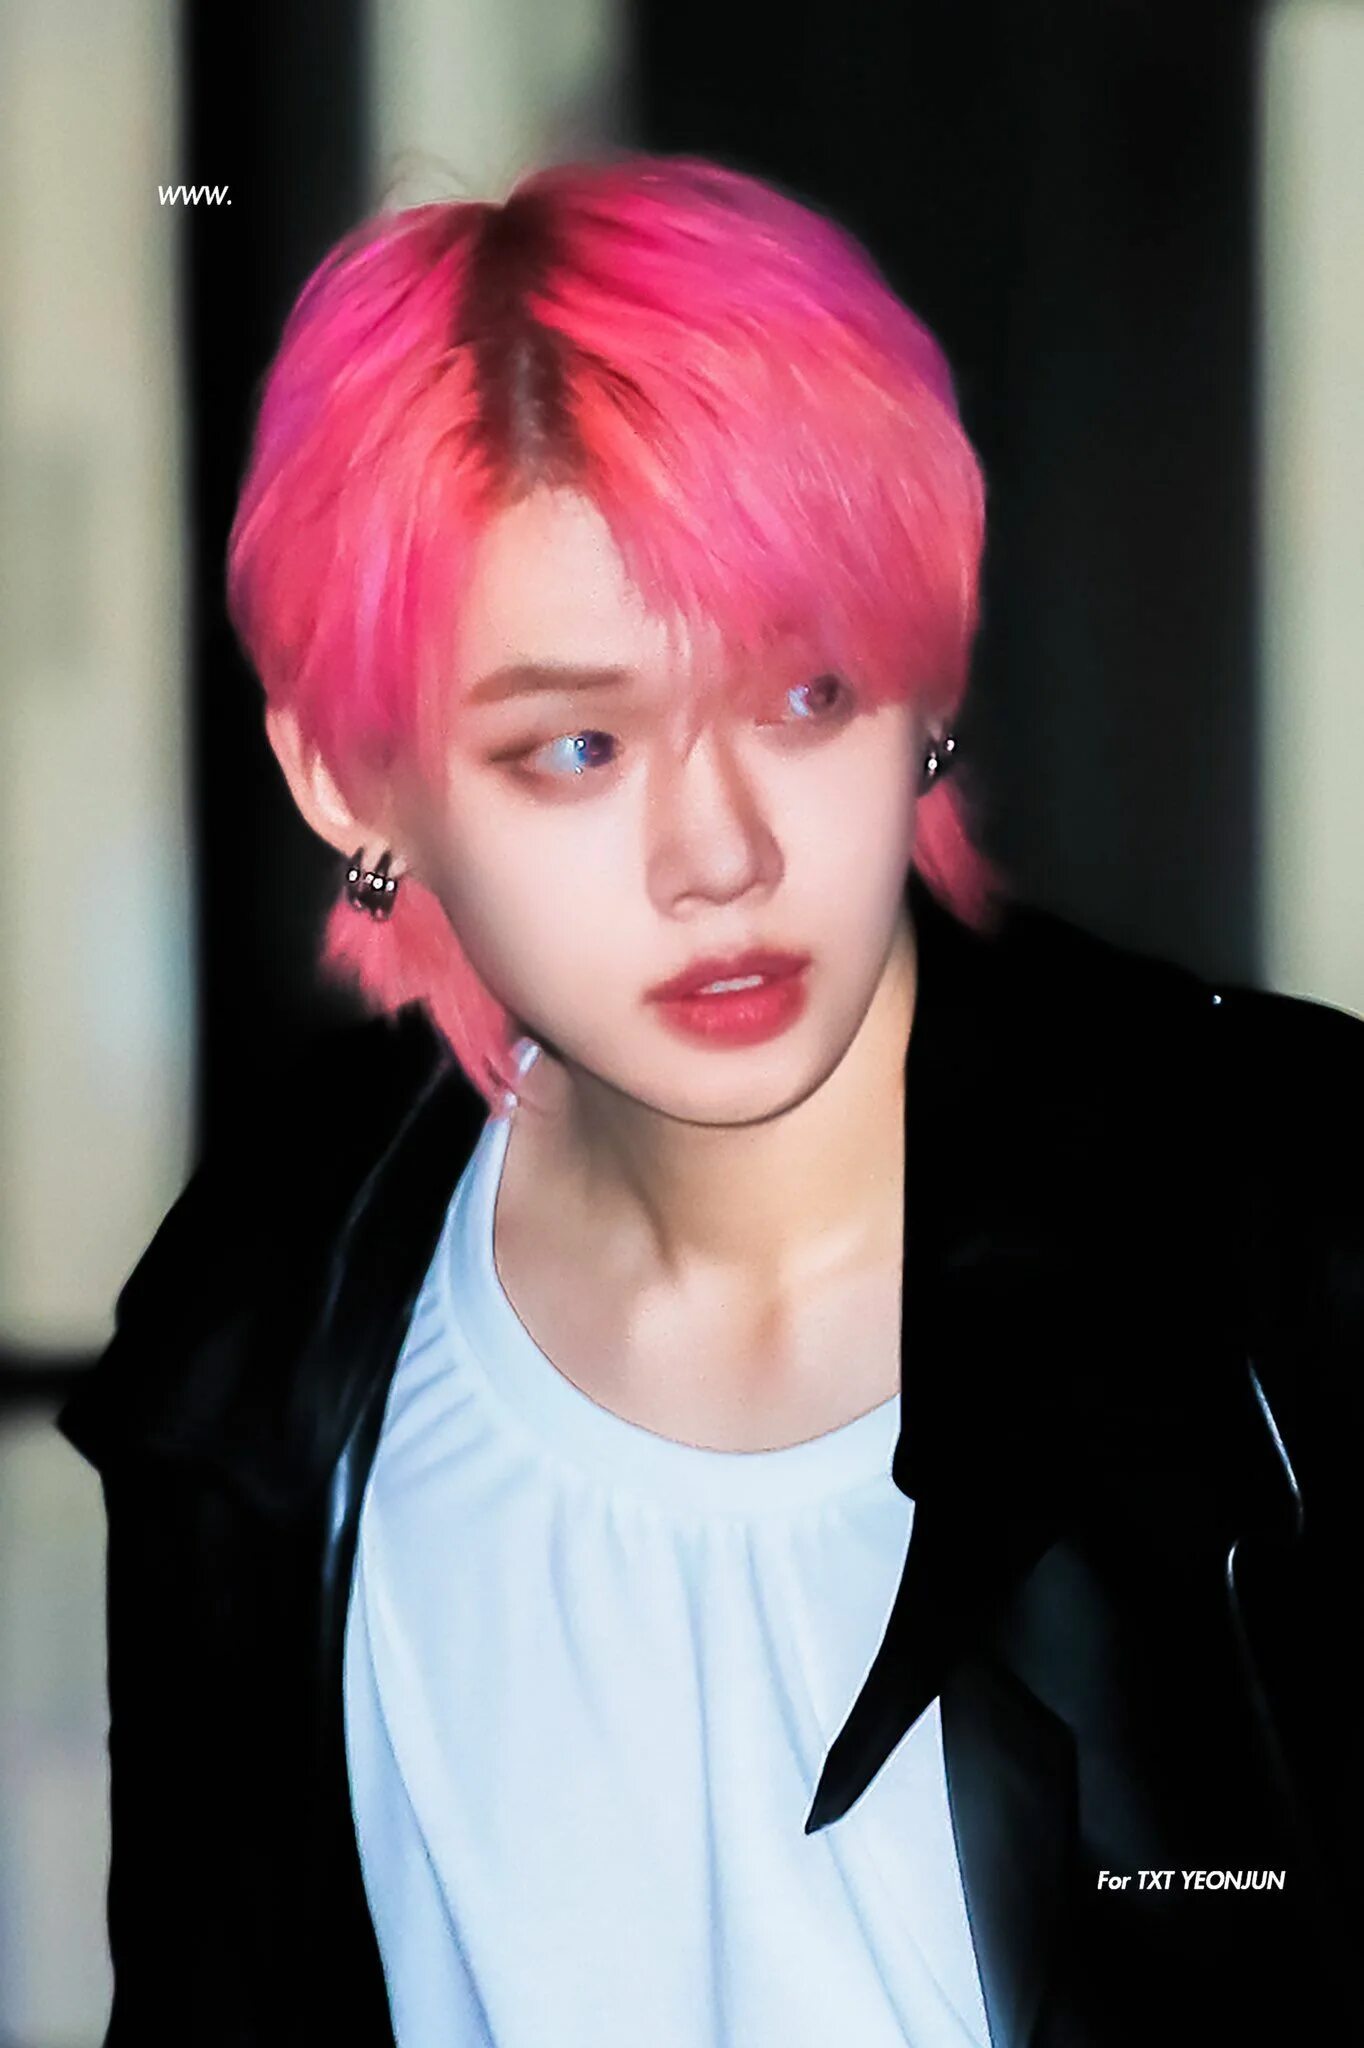 Маллет Енджун. Yeonjun Pink hair. Ёнджун txt с розовыми волосами. Чхве ёнджун с розовыми волосами.